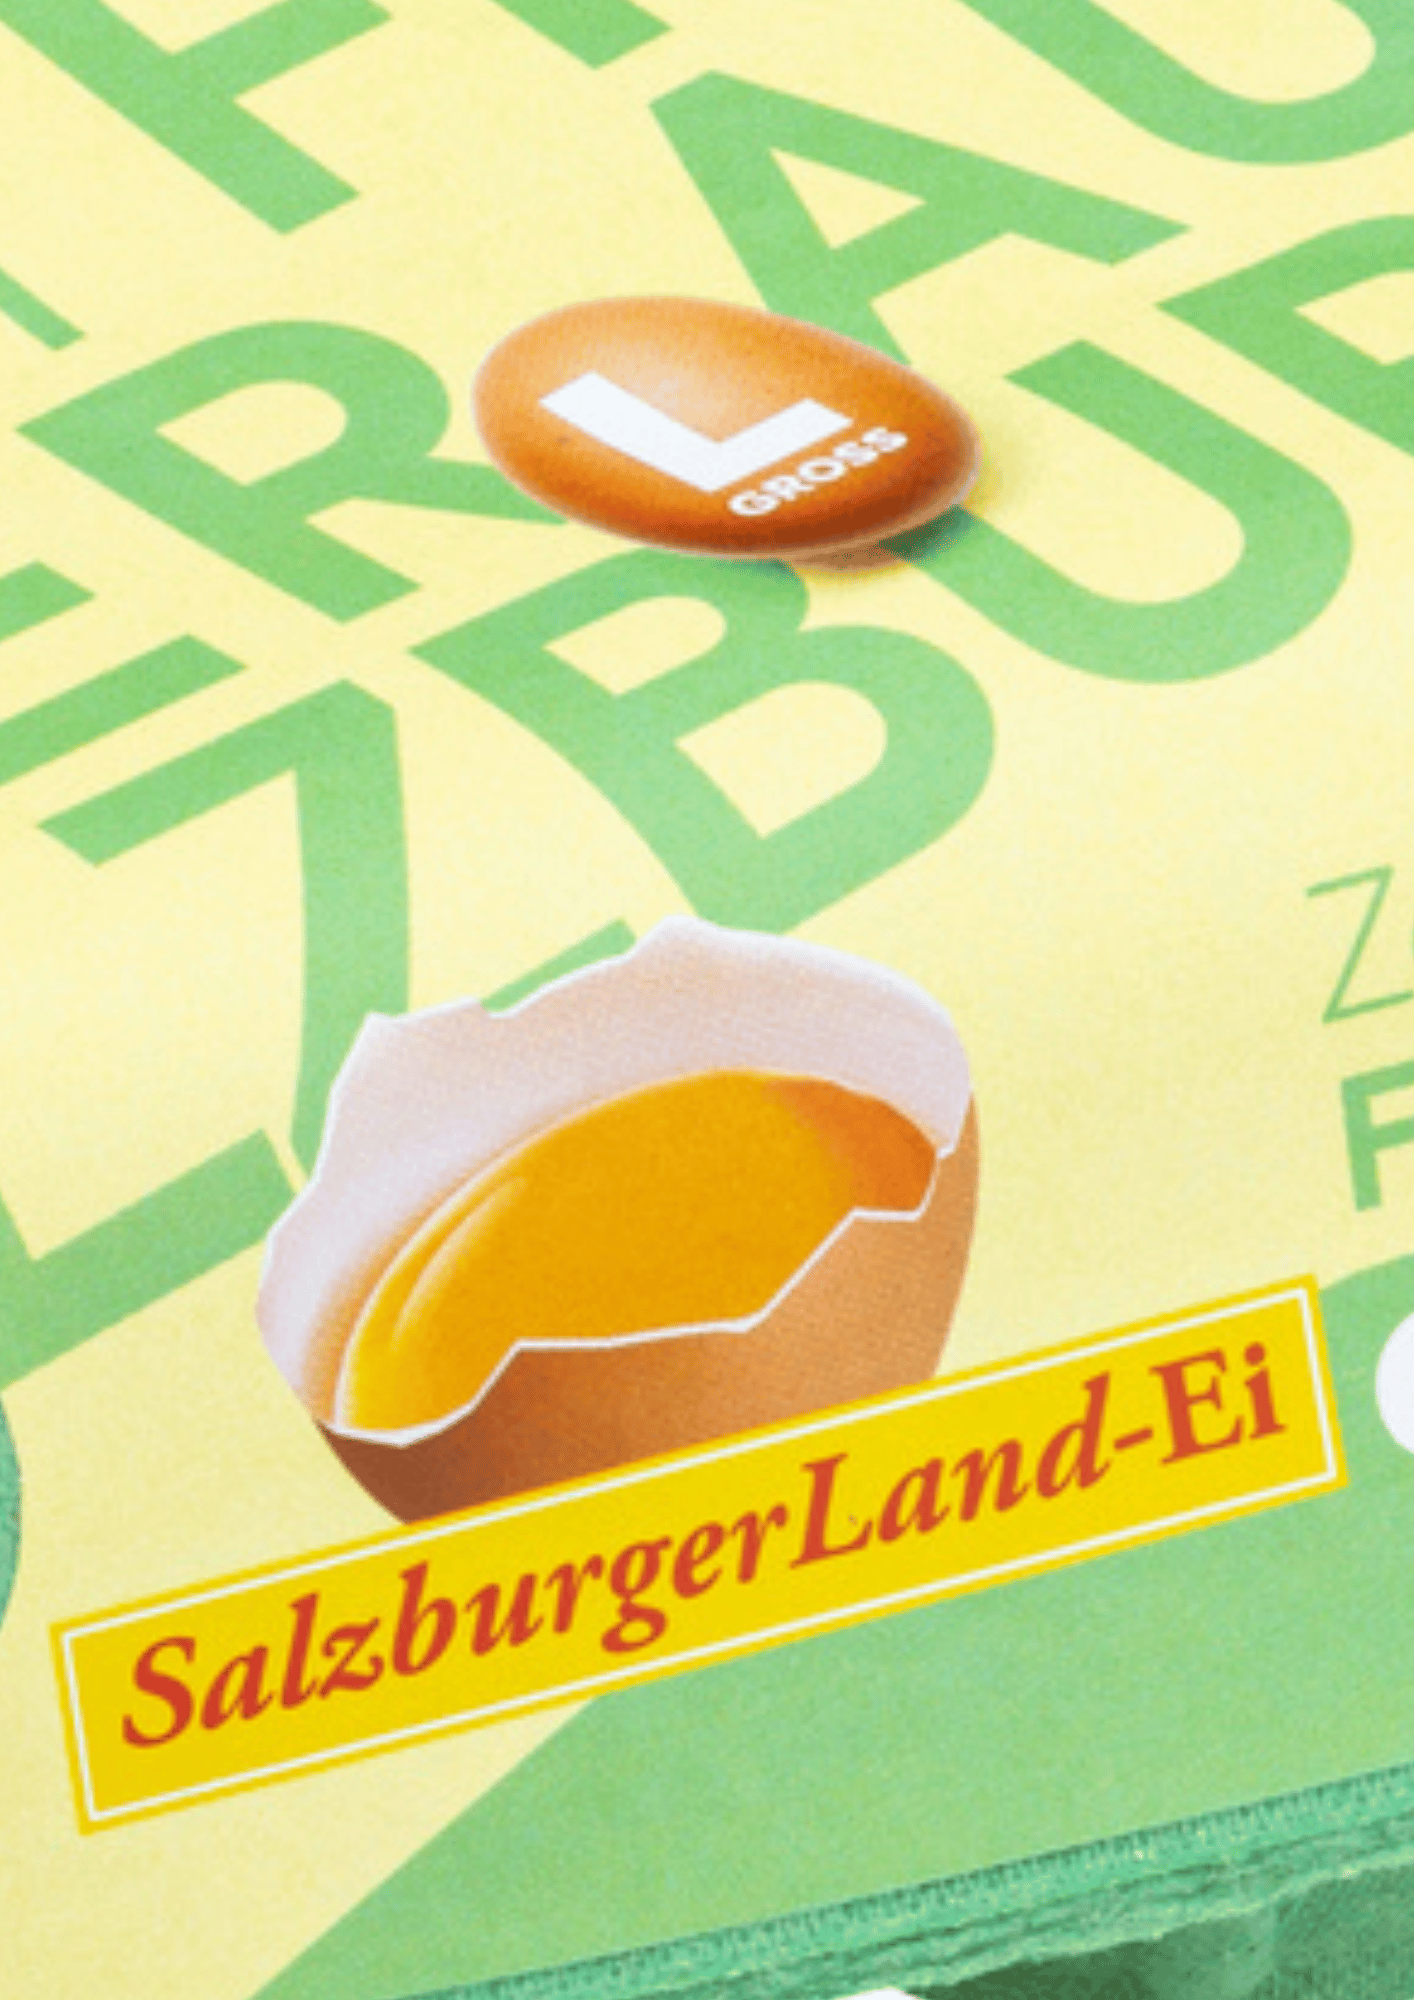 Frankgut - SalzburgerLand Ei bei Salzburg schmeckt